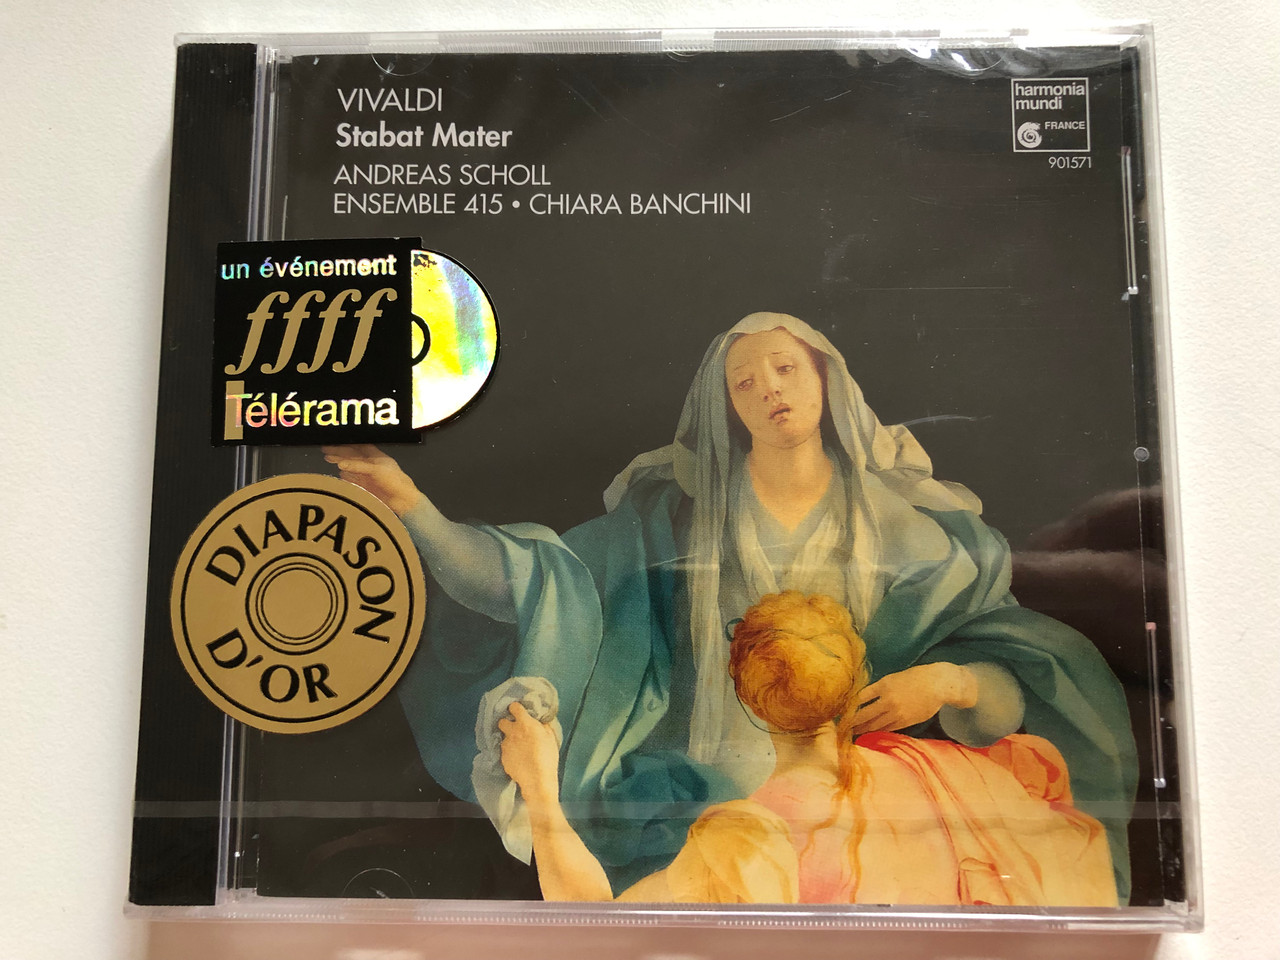 Tot stand brengen systematisch plus Vivaldi - Stabat Mater - Andreas Scholl, Ensemble 415, Chiara Banchini /  Harmonia Mundi France Audio CD 1995 / HMC 901571 - bibleinmylanguage